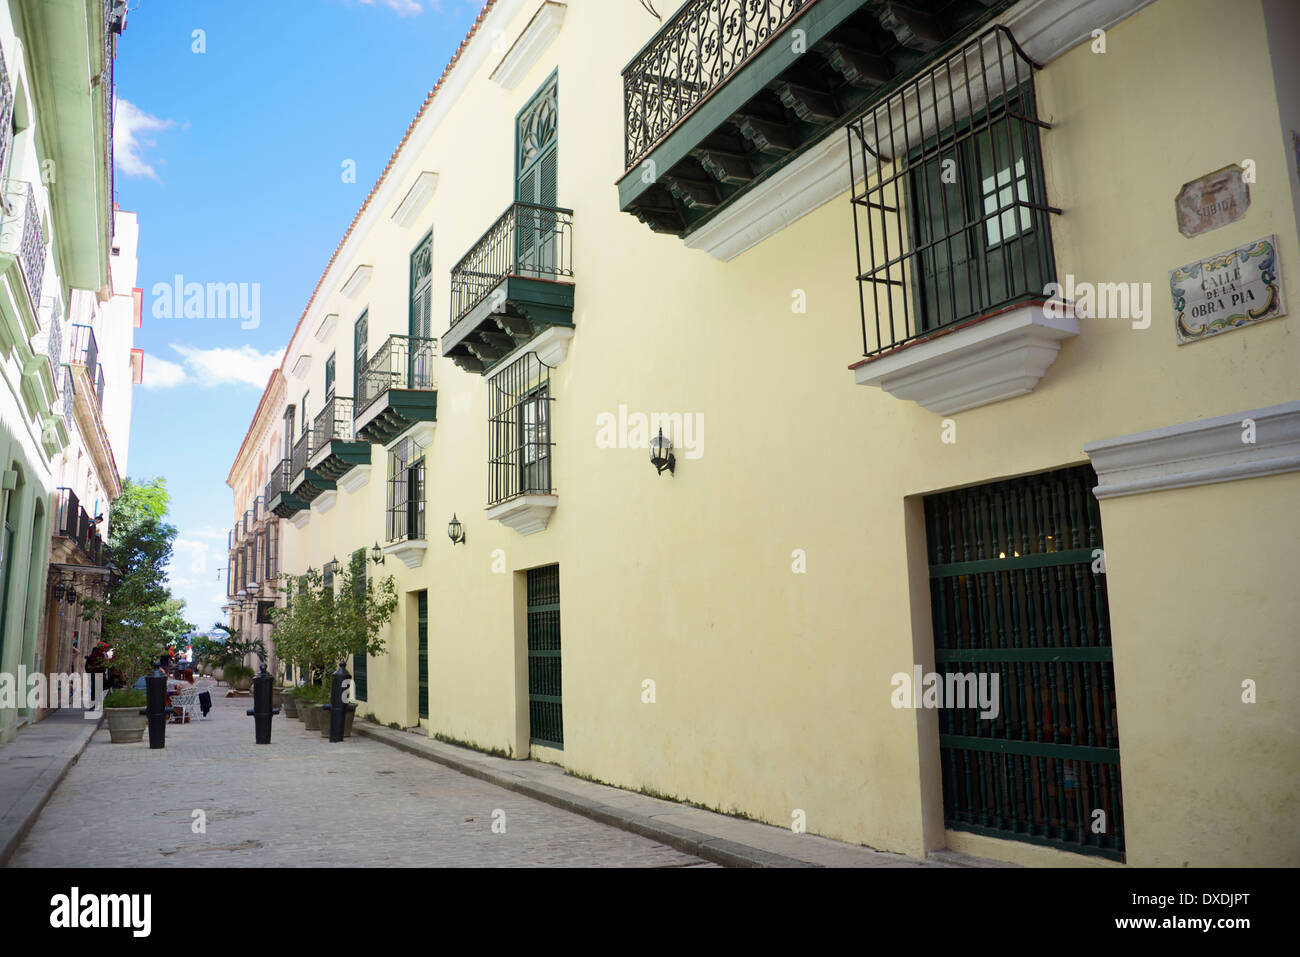 Typische Fußgängerzone Straße Calle De La Obra Pia Alt-Havanna Kuba Stockfoto